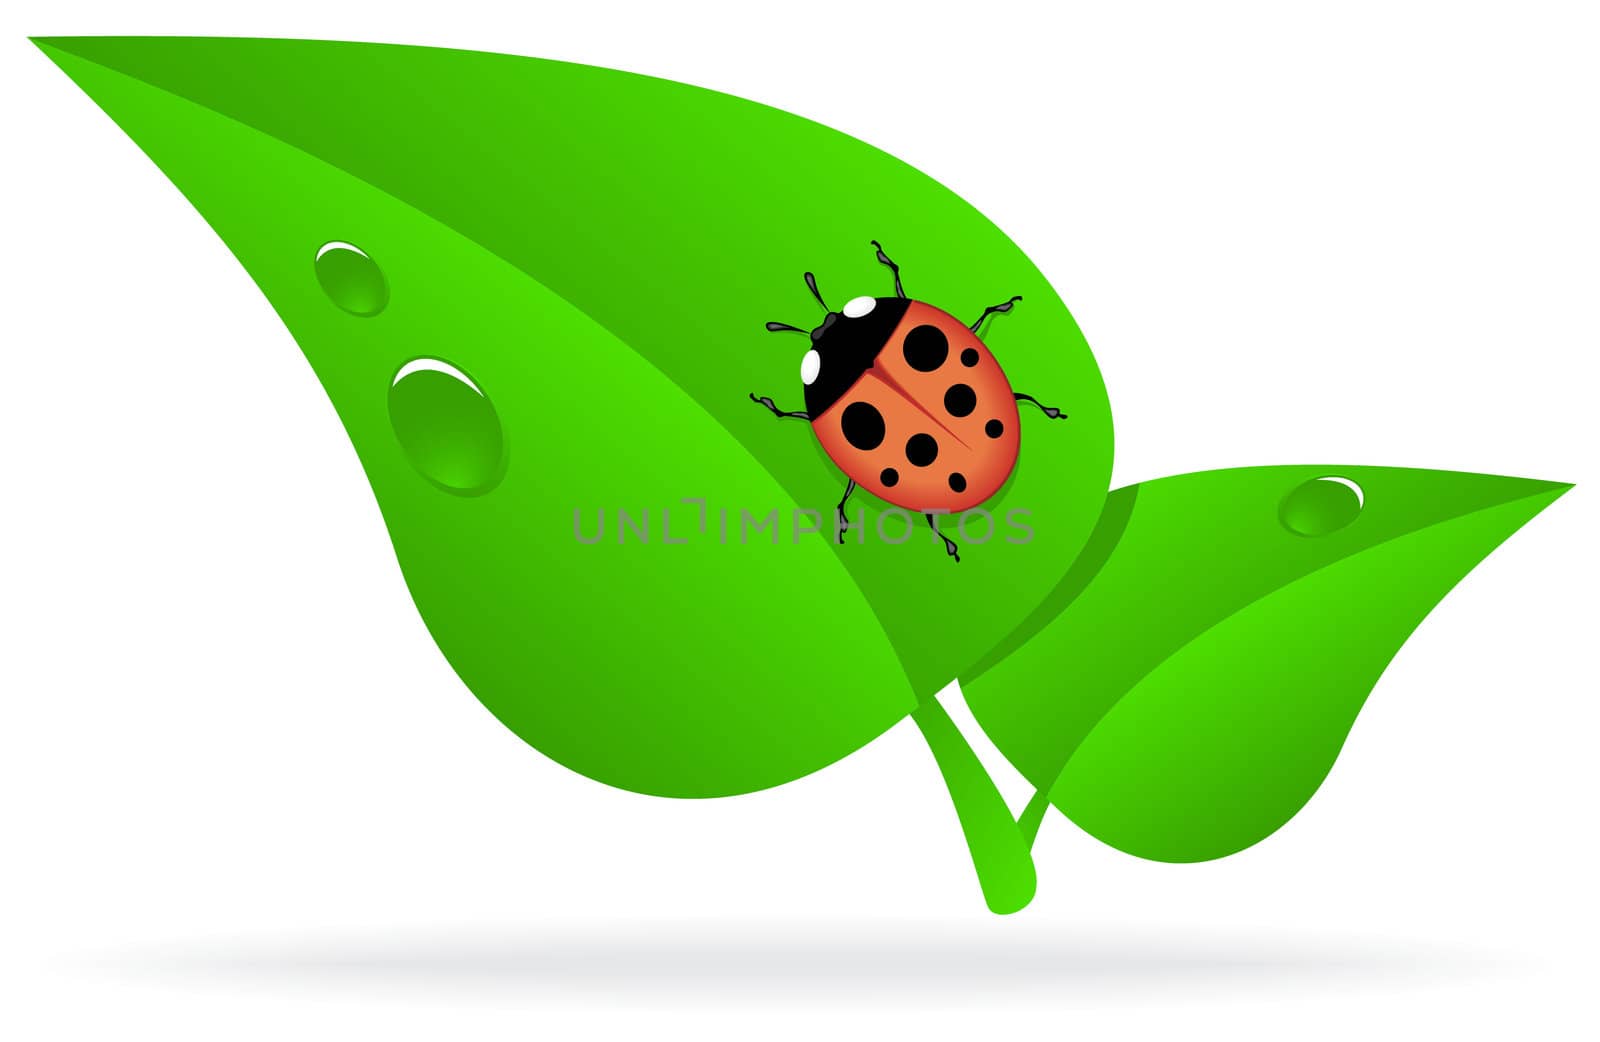 Ladybug on green leaf by rodakm